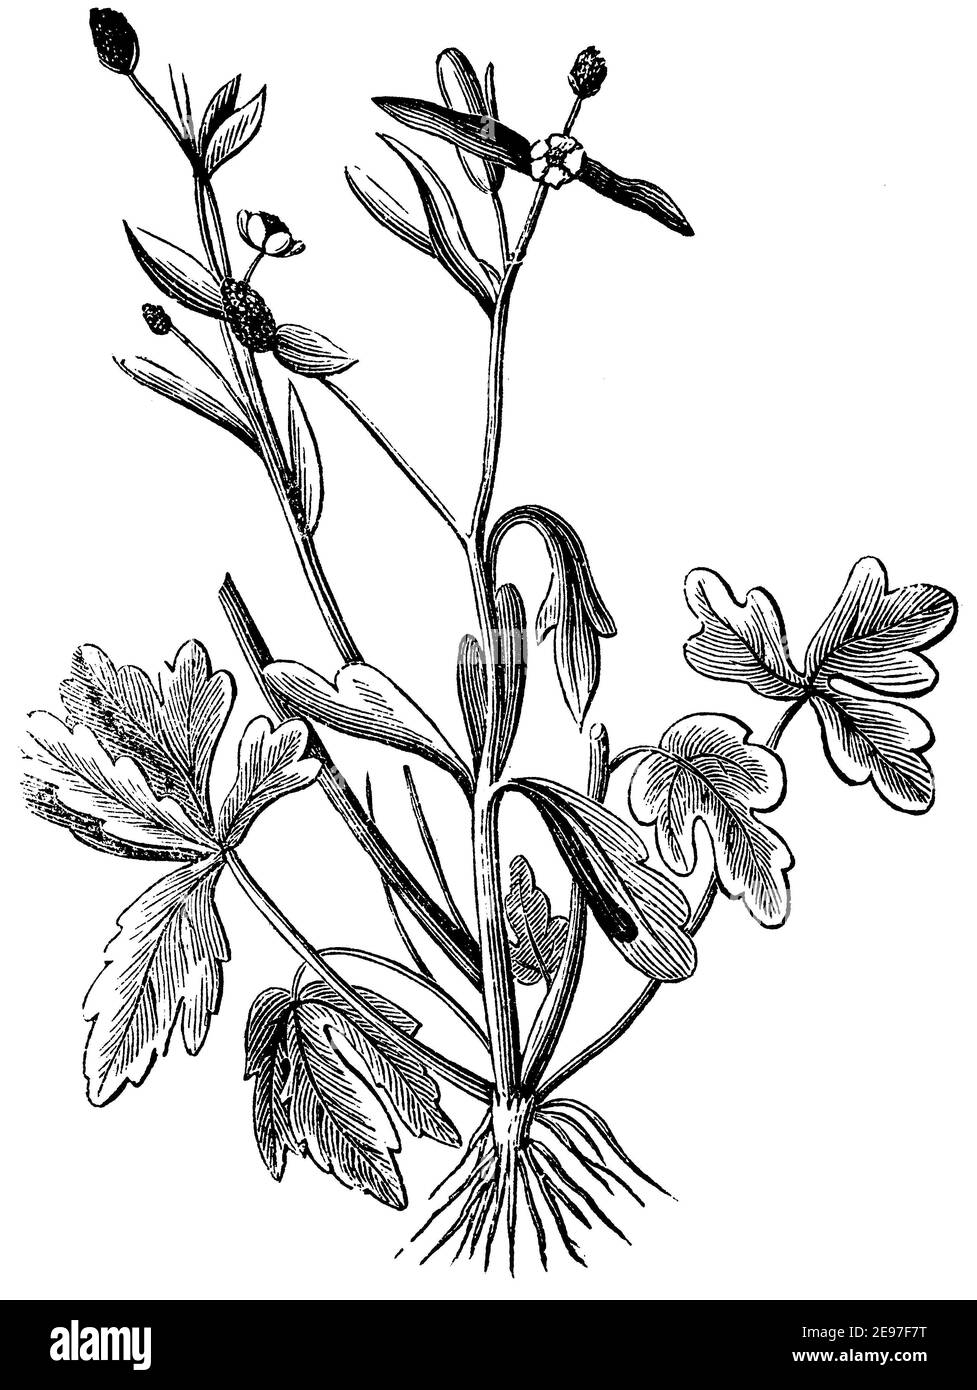 celery-leaved buttercup / Ranunculus sceleratus / Gift-Hahnenfuß (biology book, 1878) Stock Photo